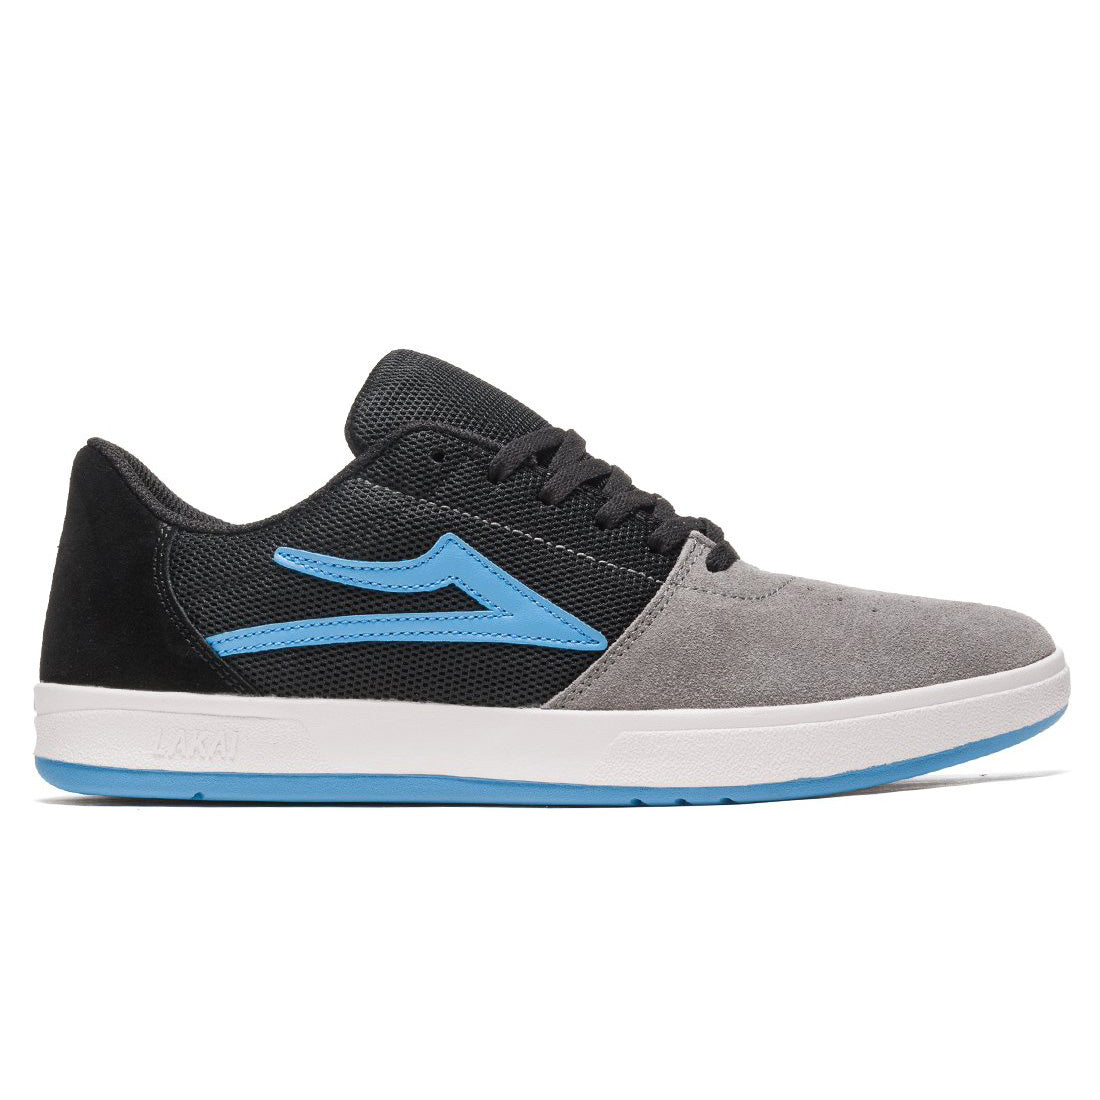 Lakai Brighton Grey / Blue Suede Skate Shoes